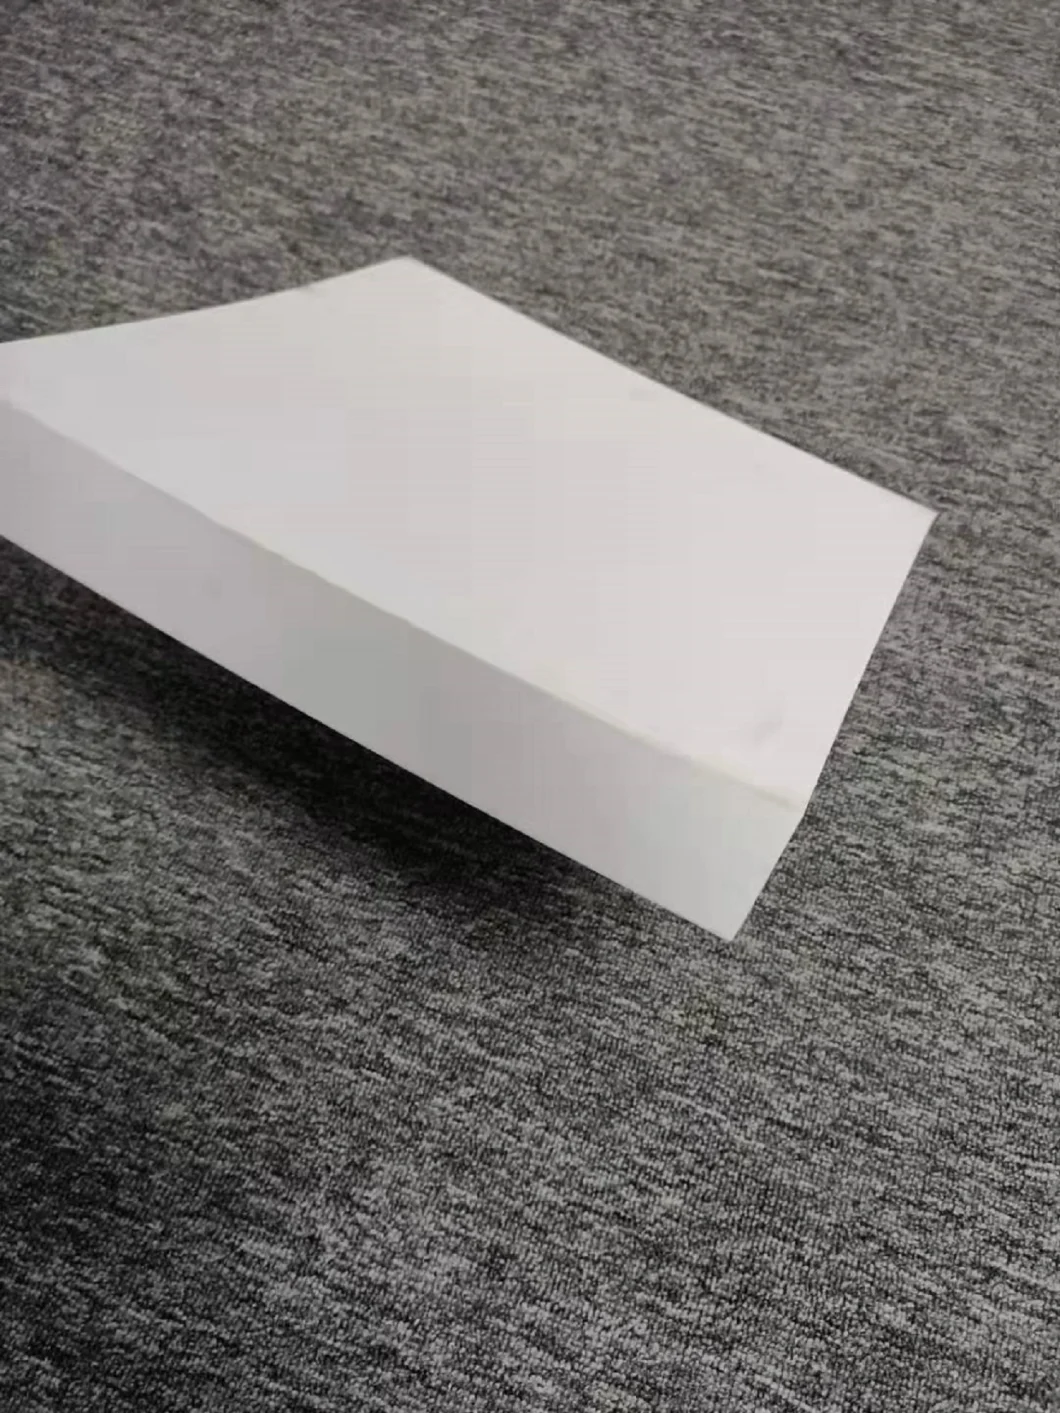 2020 High-Quality Explosion-Proof White EVA Foam Board